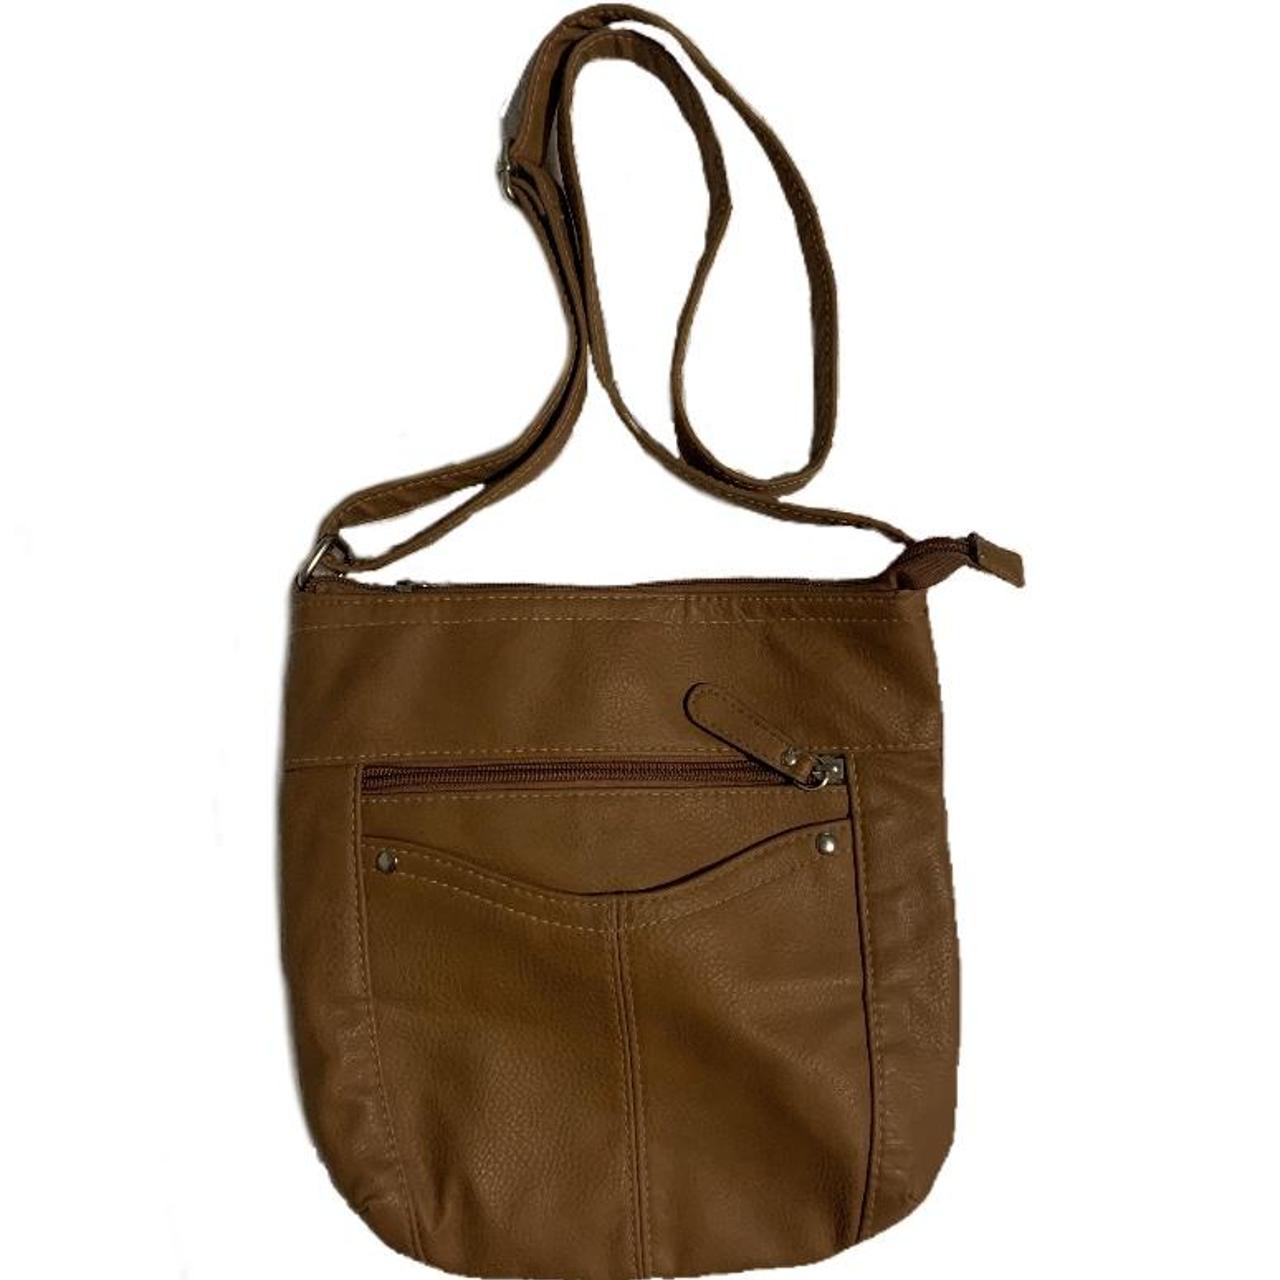 Croft & Barrow Women's Tan Bag